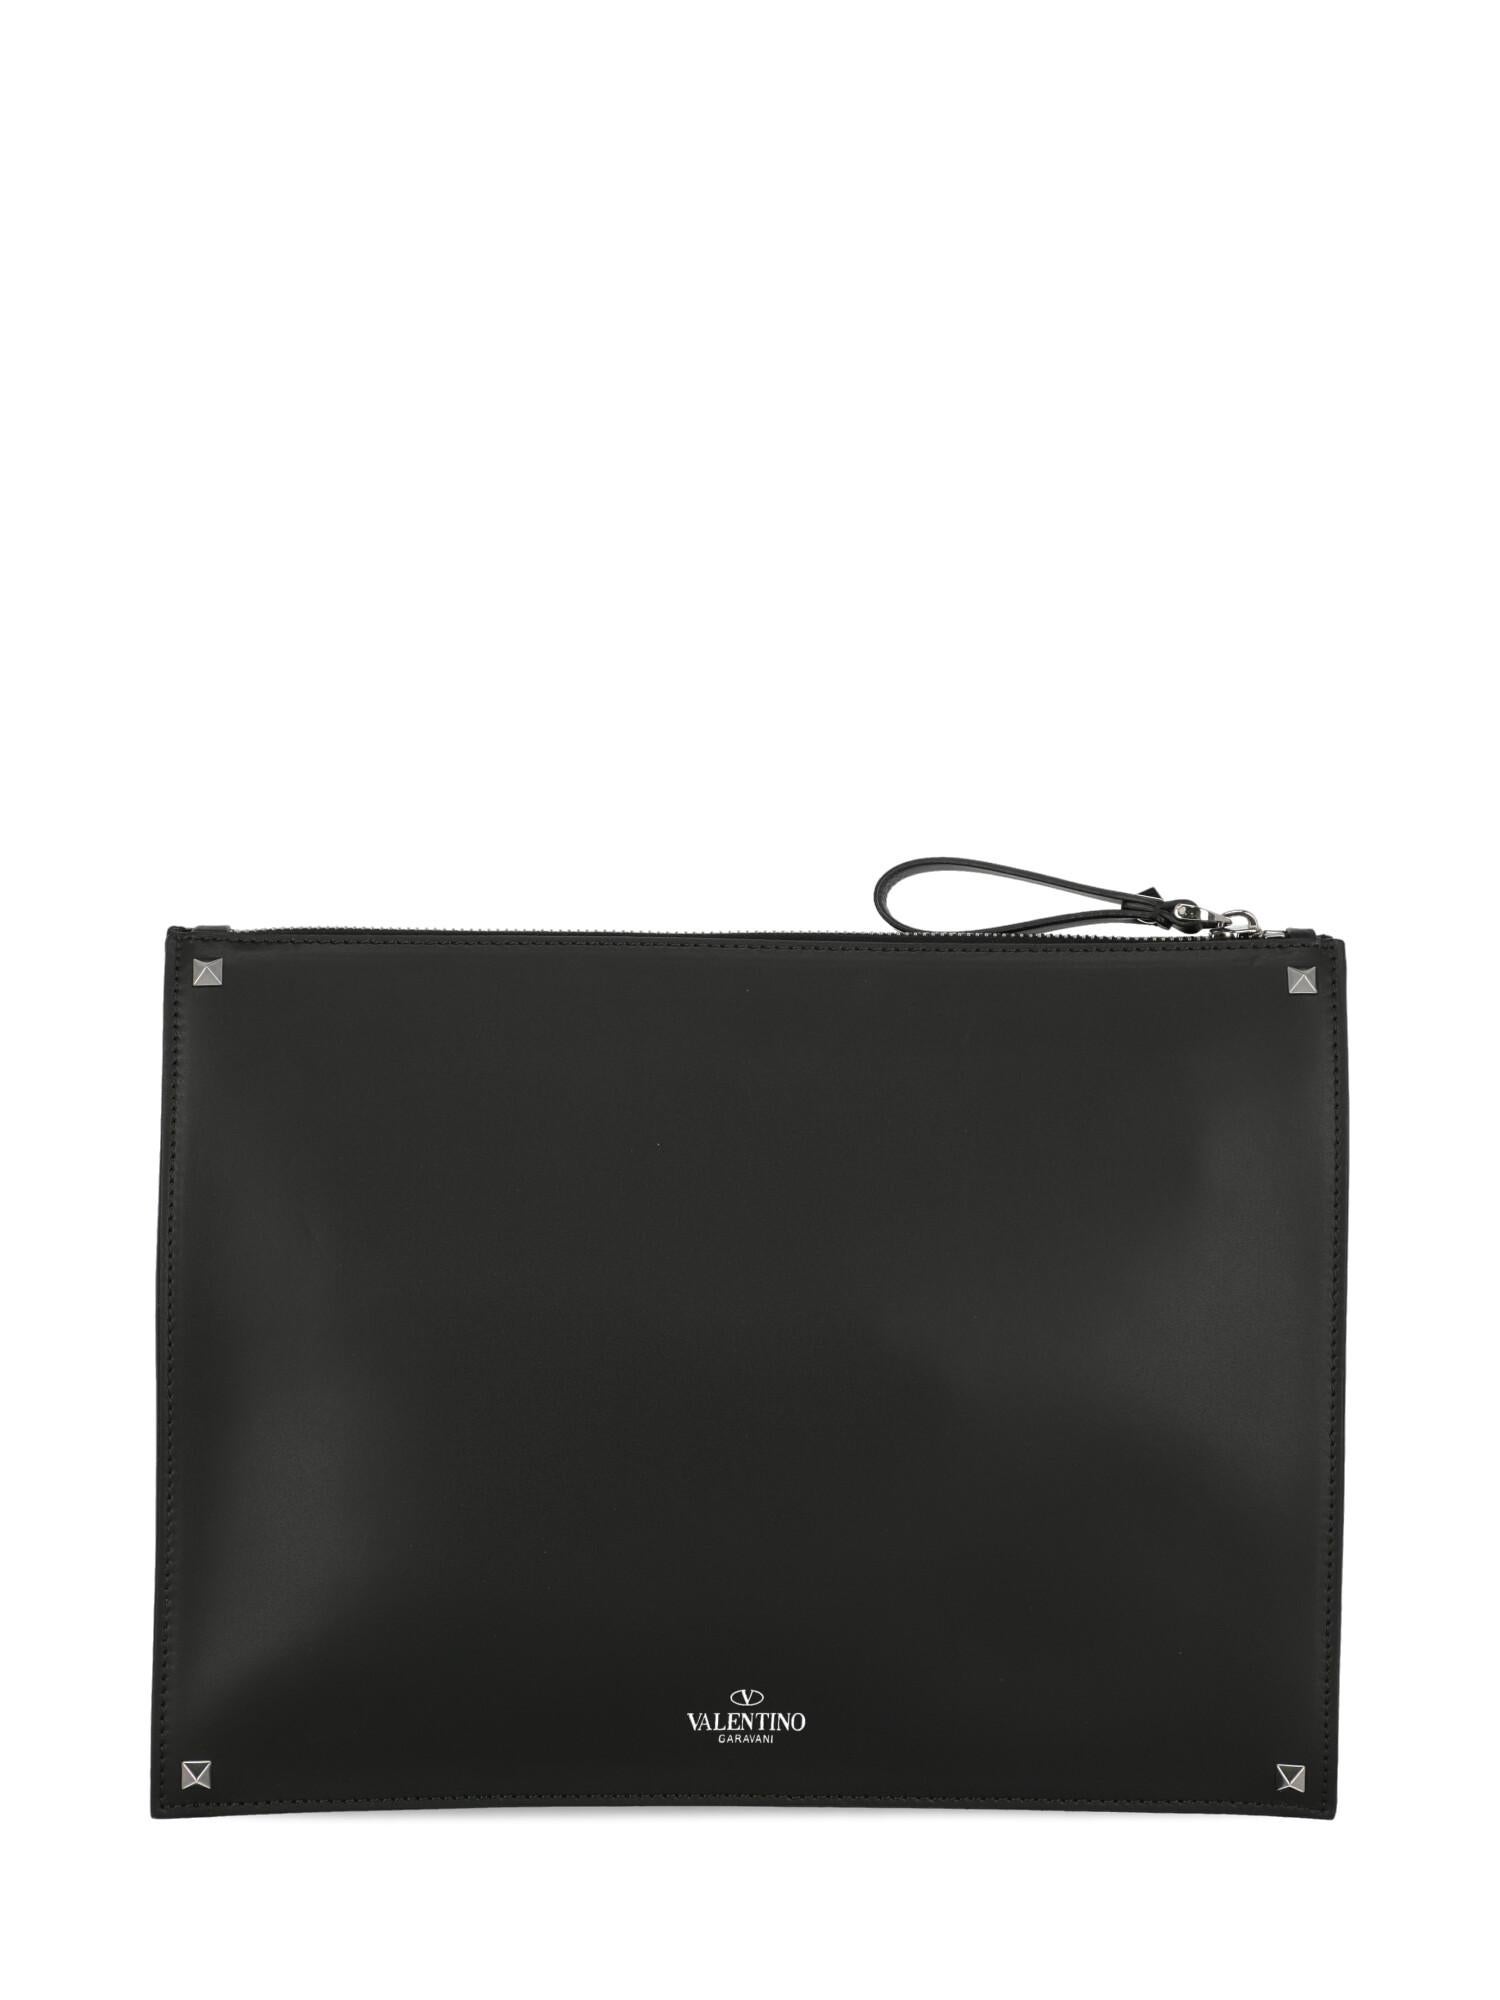 Valentino Women's Clutch Bag Black Leather 1